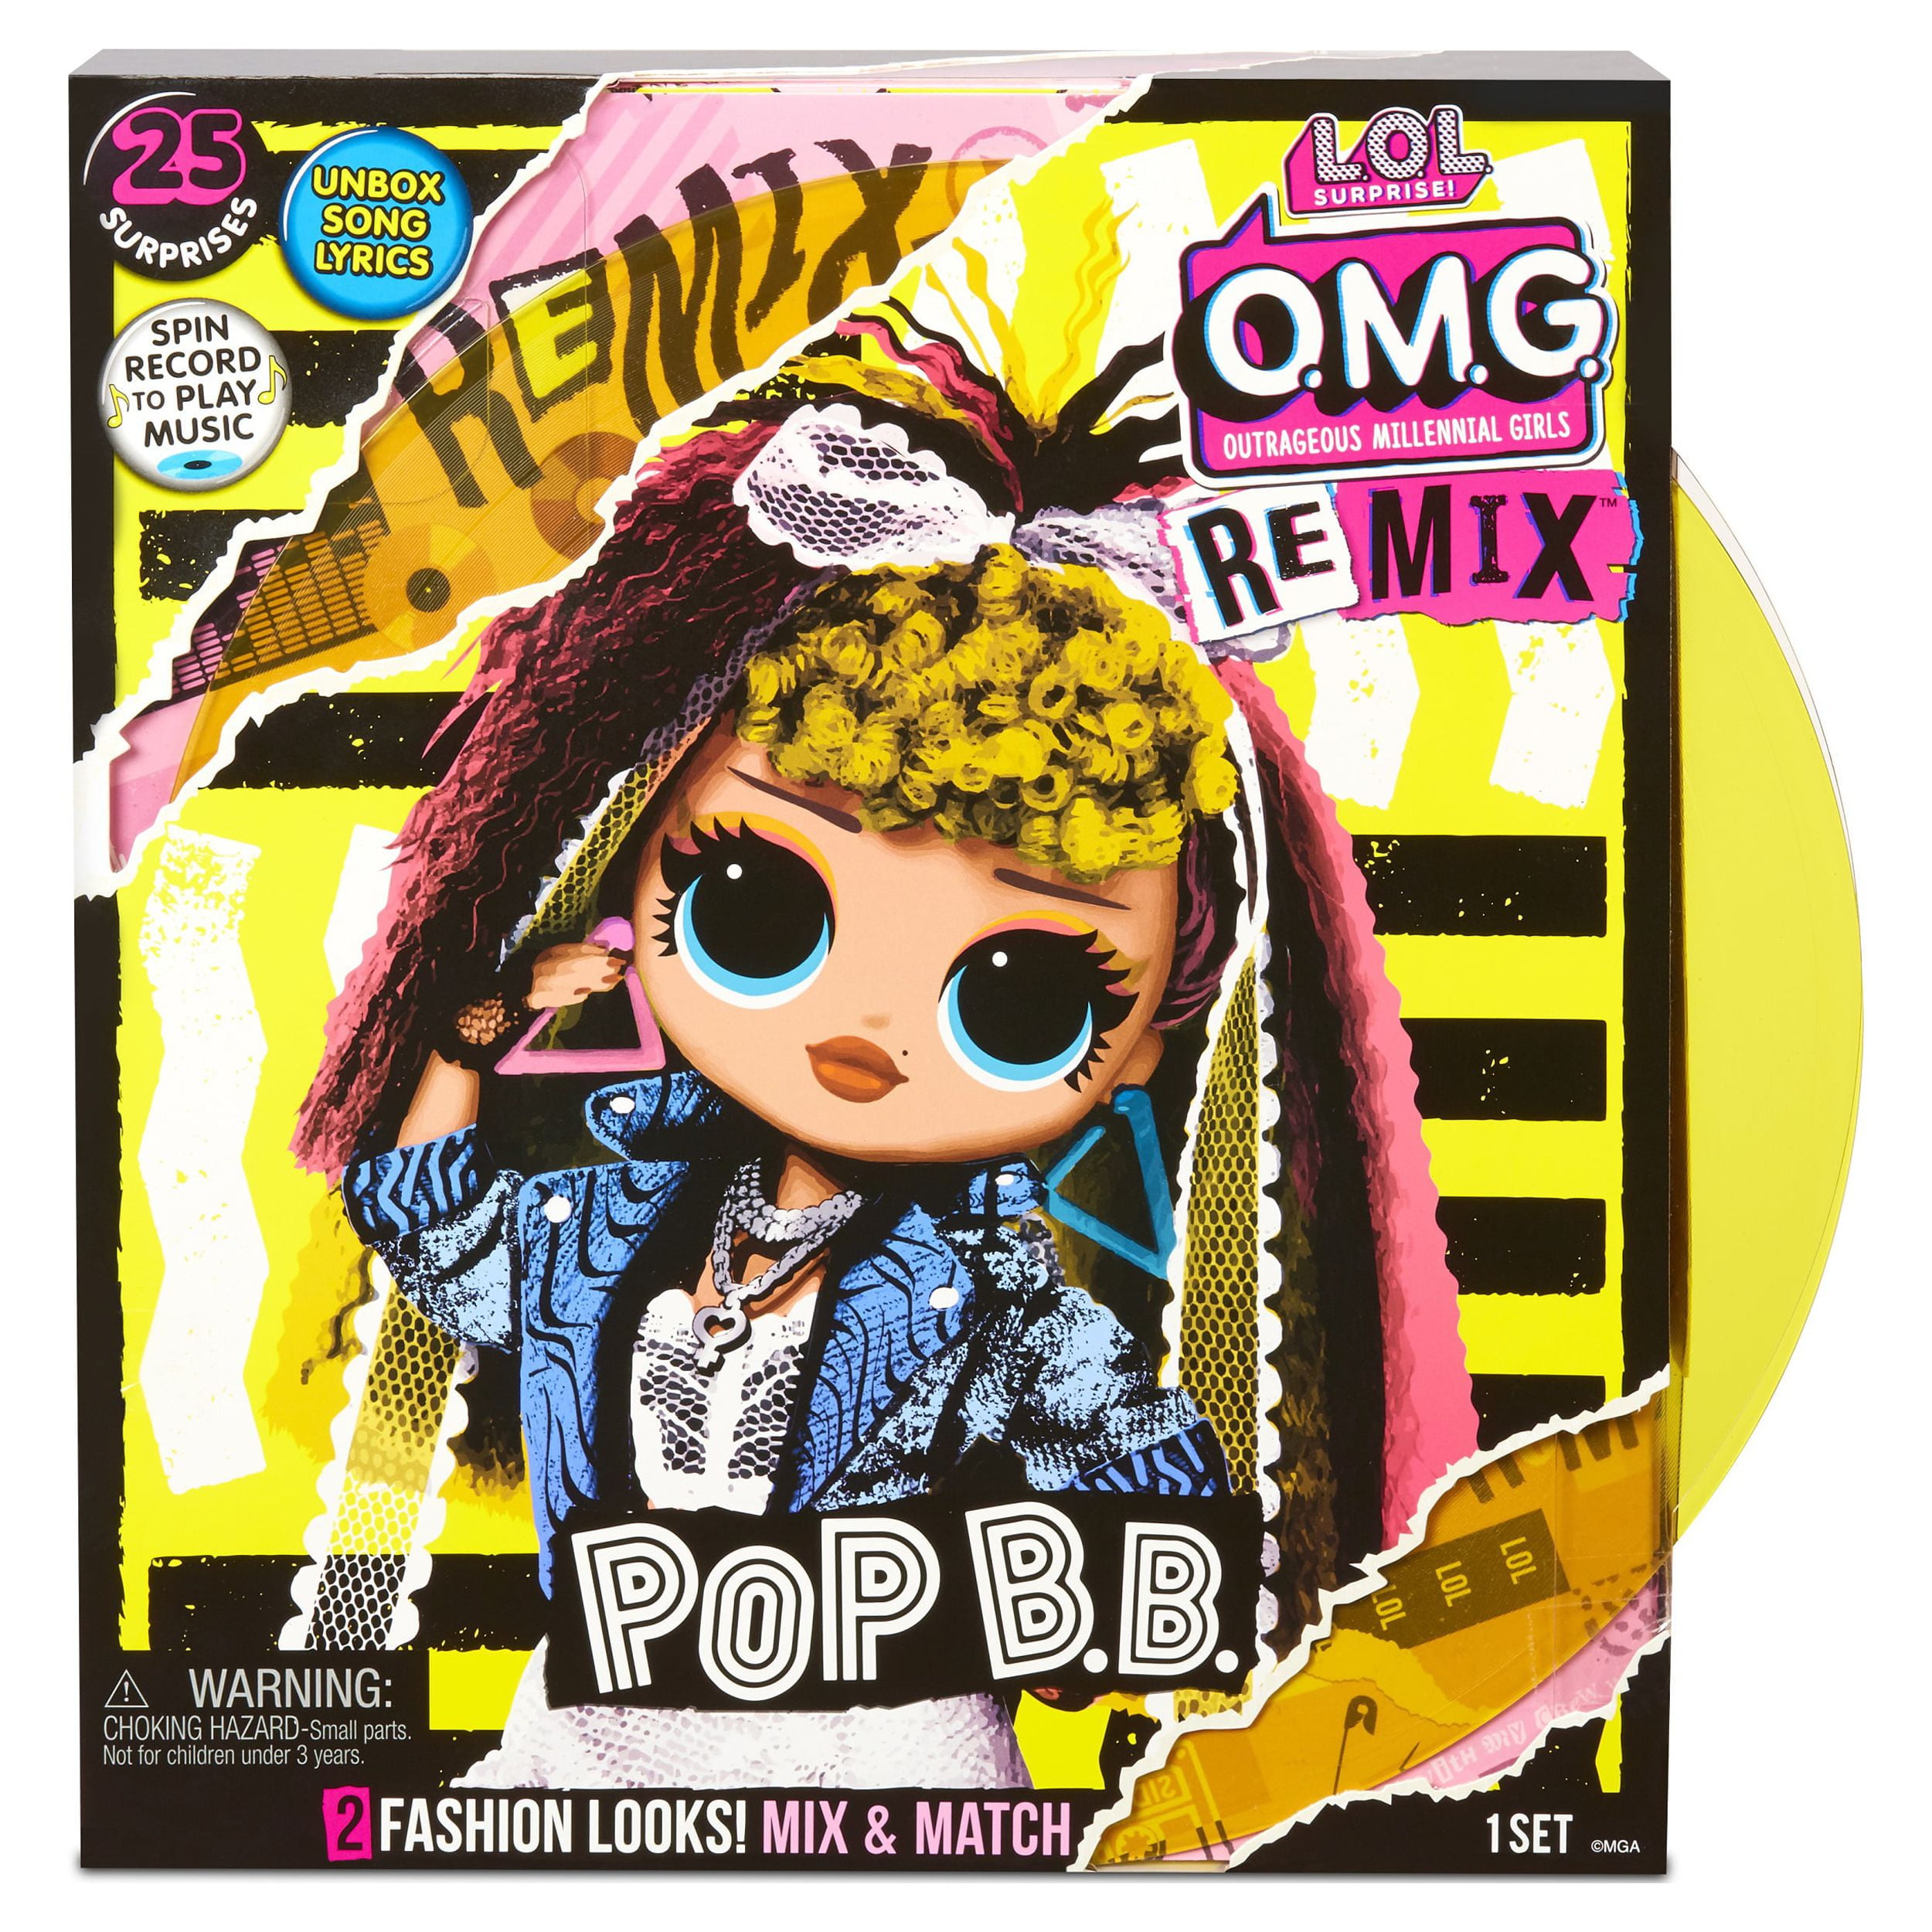 Lol Surprise OMG Remix Pop B.B. Fashion Doll 25 Surprises